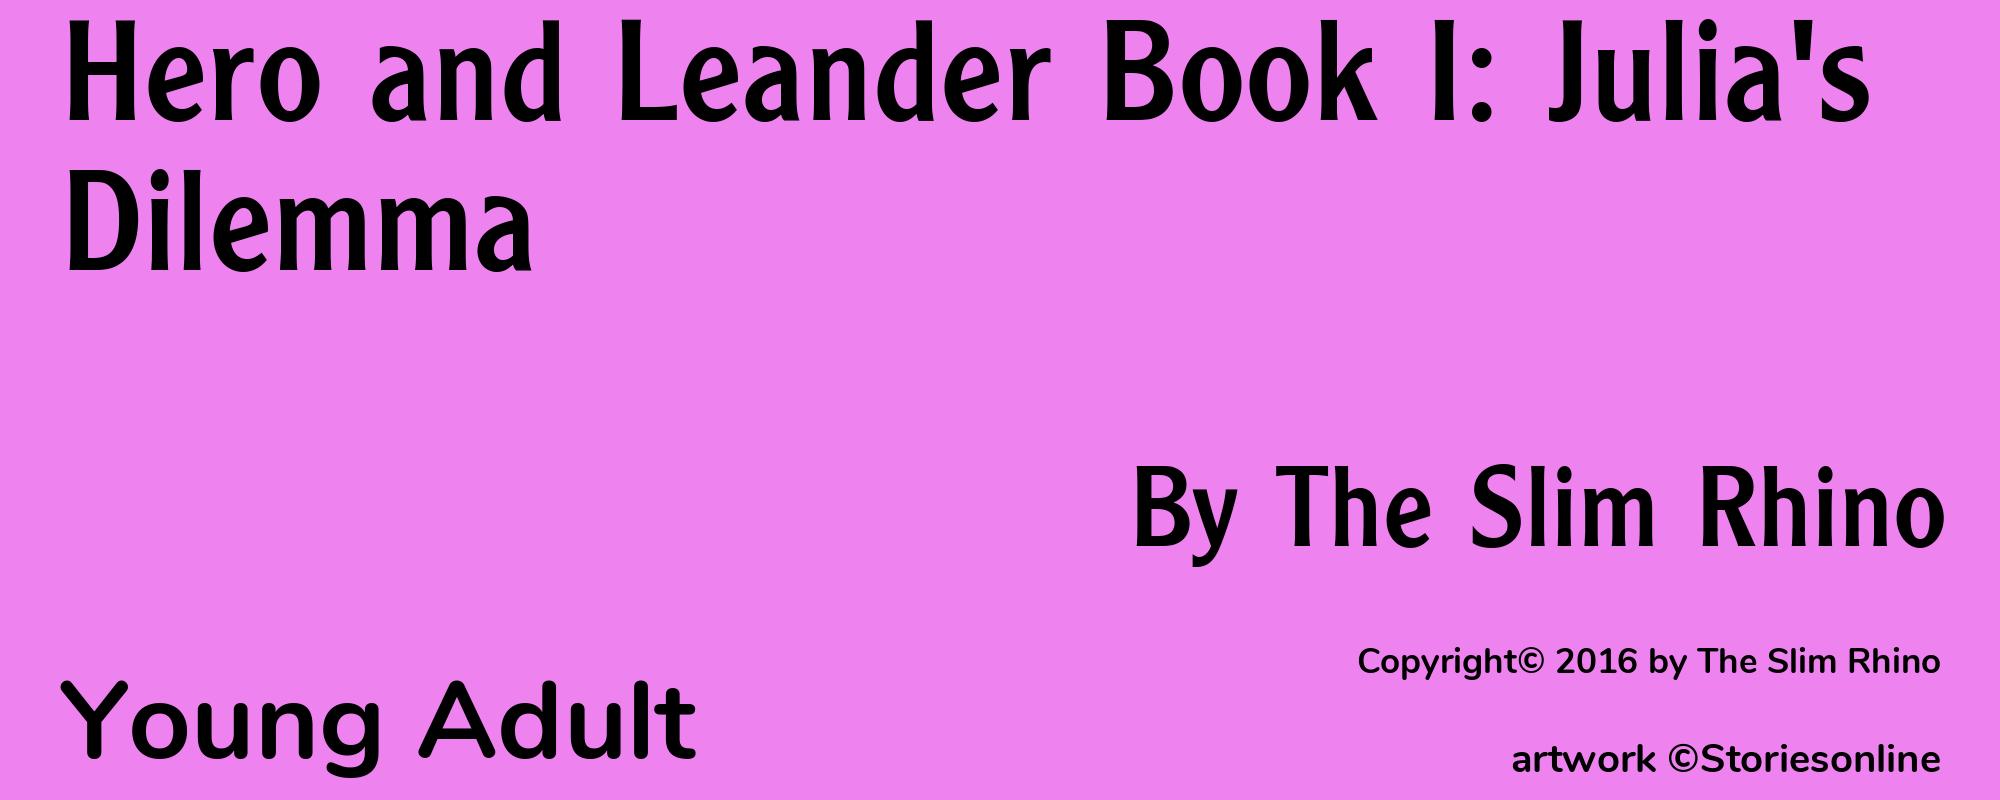 Hero and Leander Book I: Julia's Dilemma - Cover